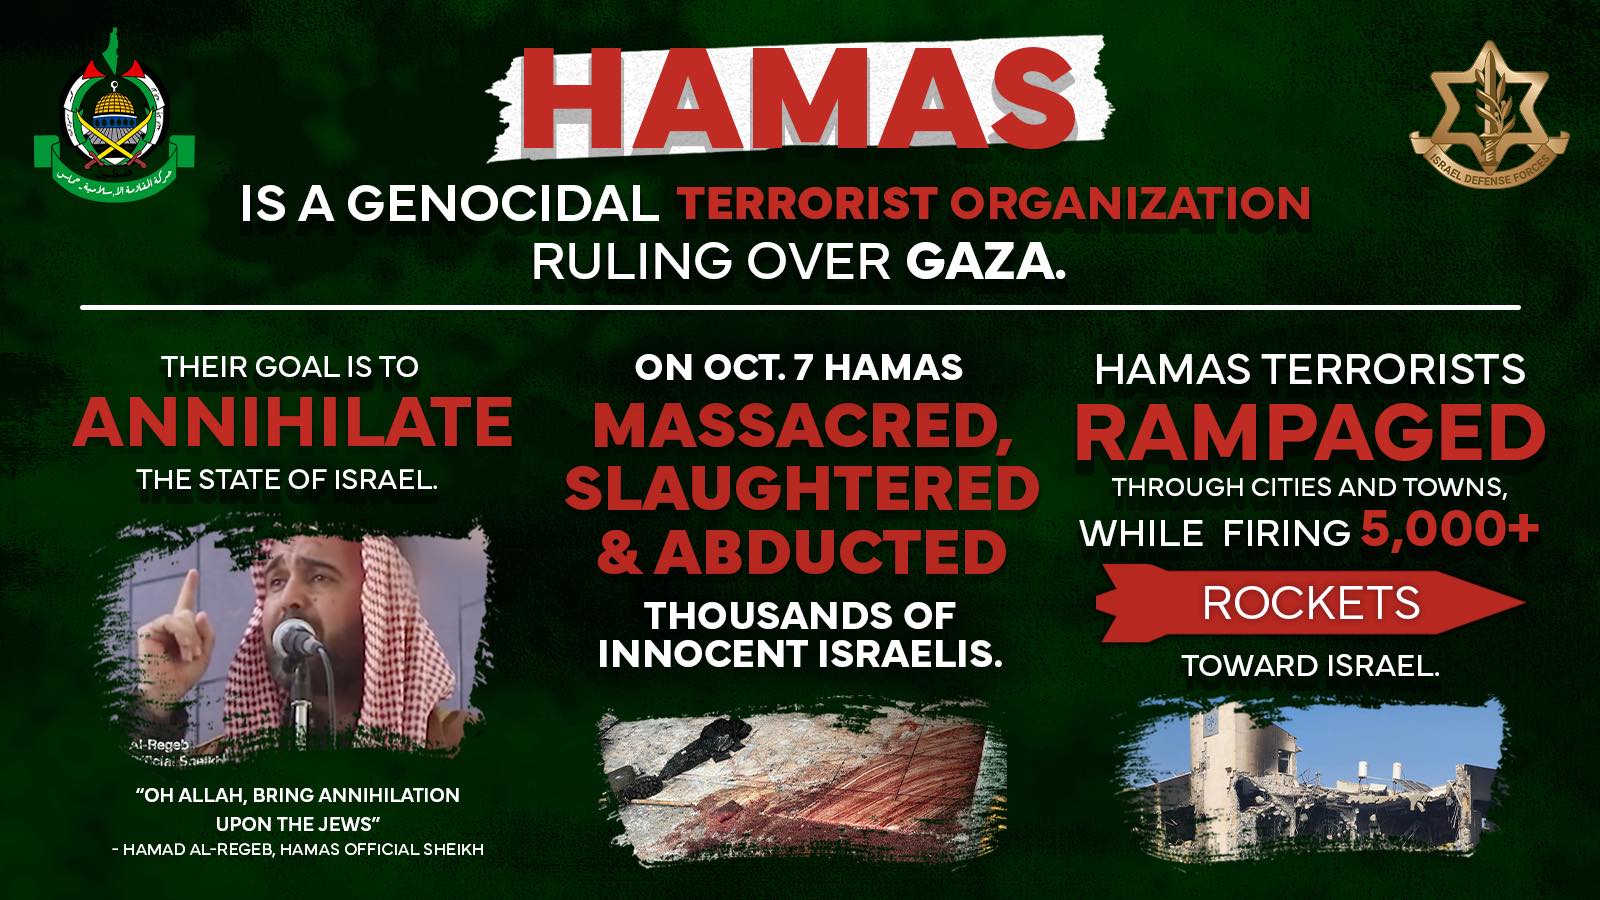 Hamas is a terrorist group